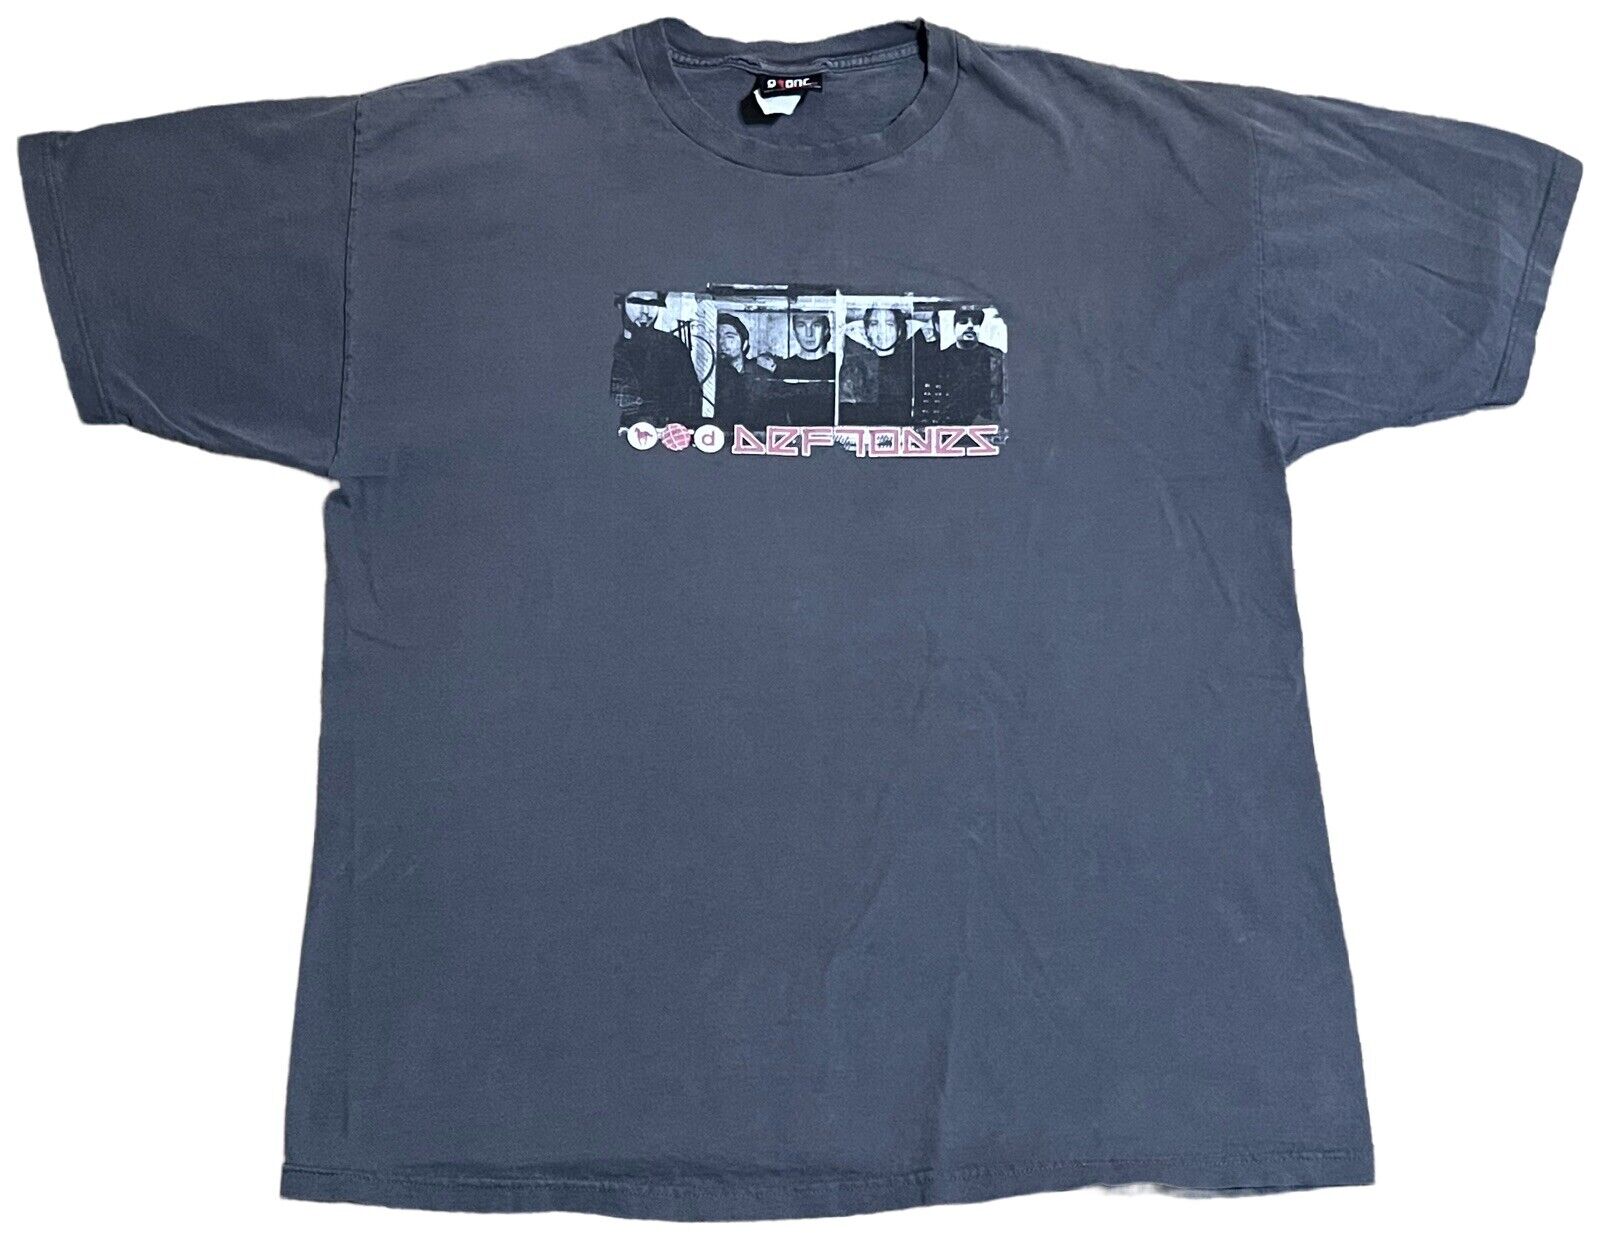 RARE GRAIL Vintage 90s Giant Deftones Band Tees Shirt Music Grunge Size XL